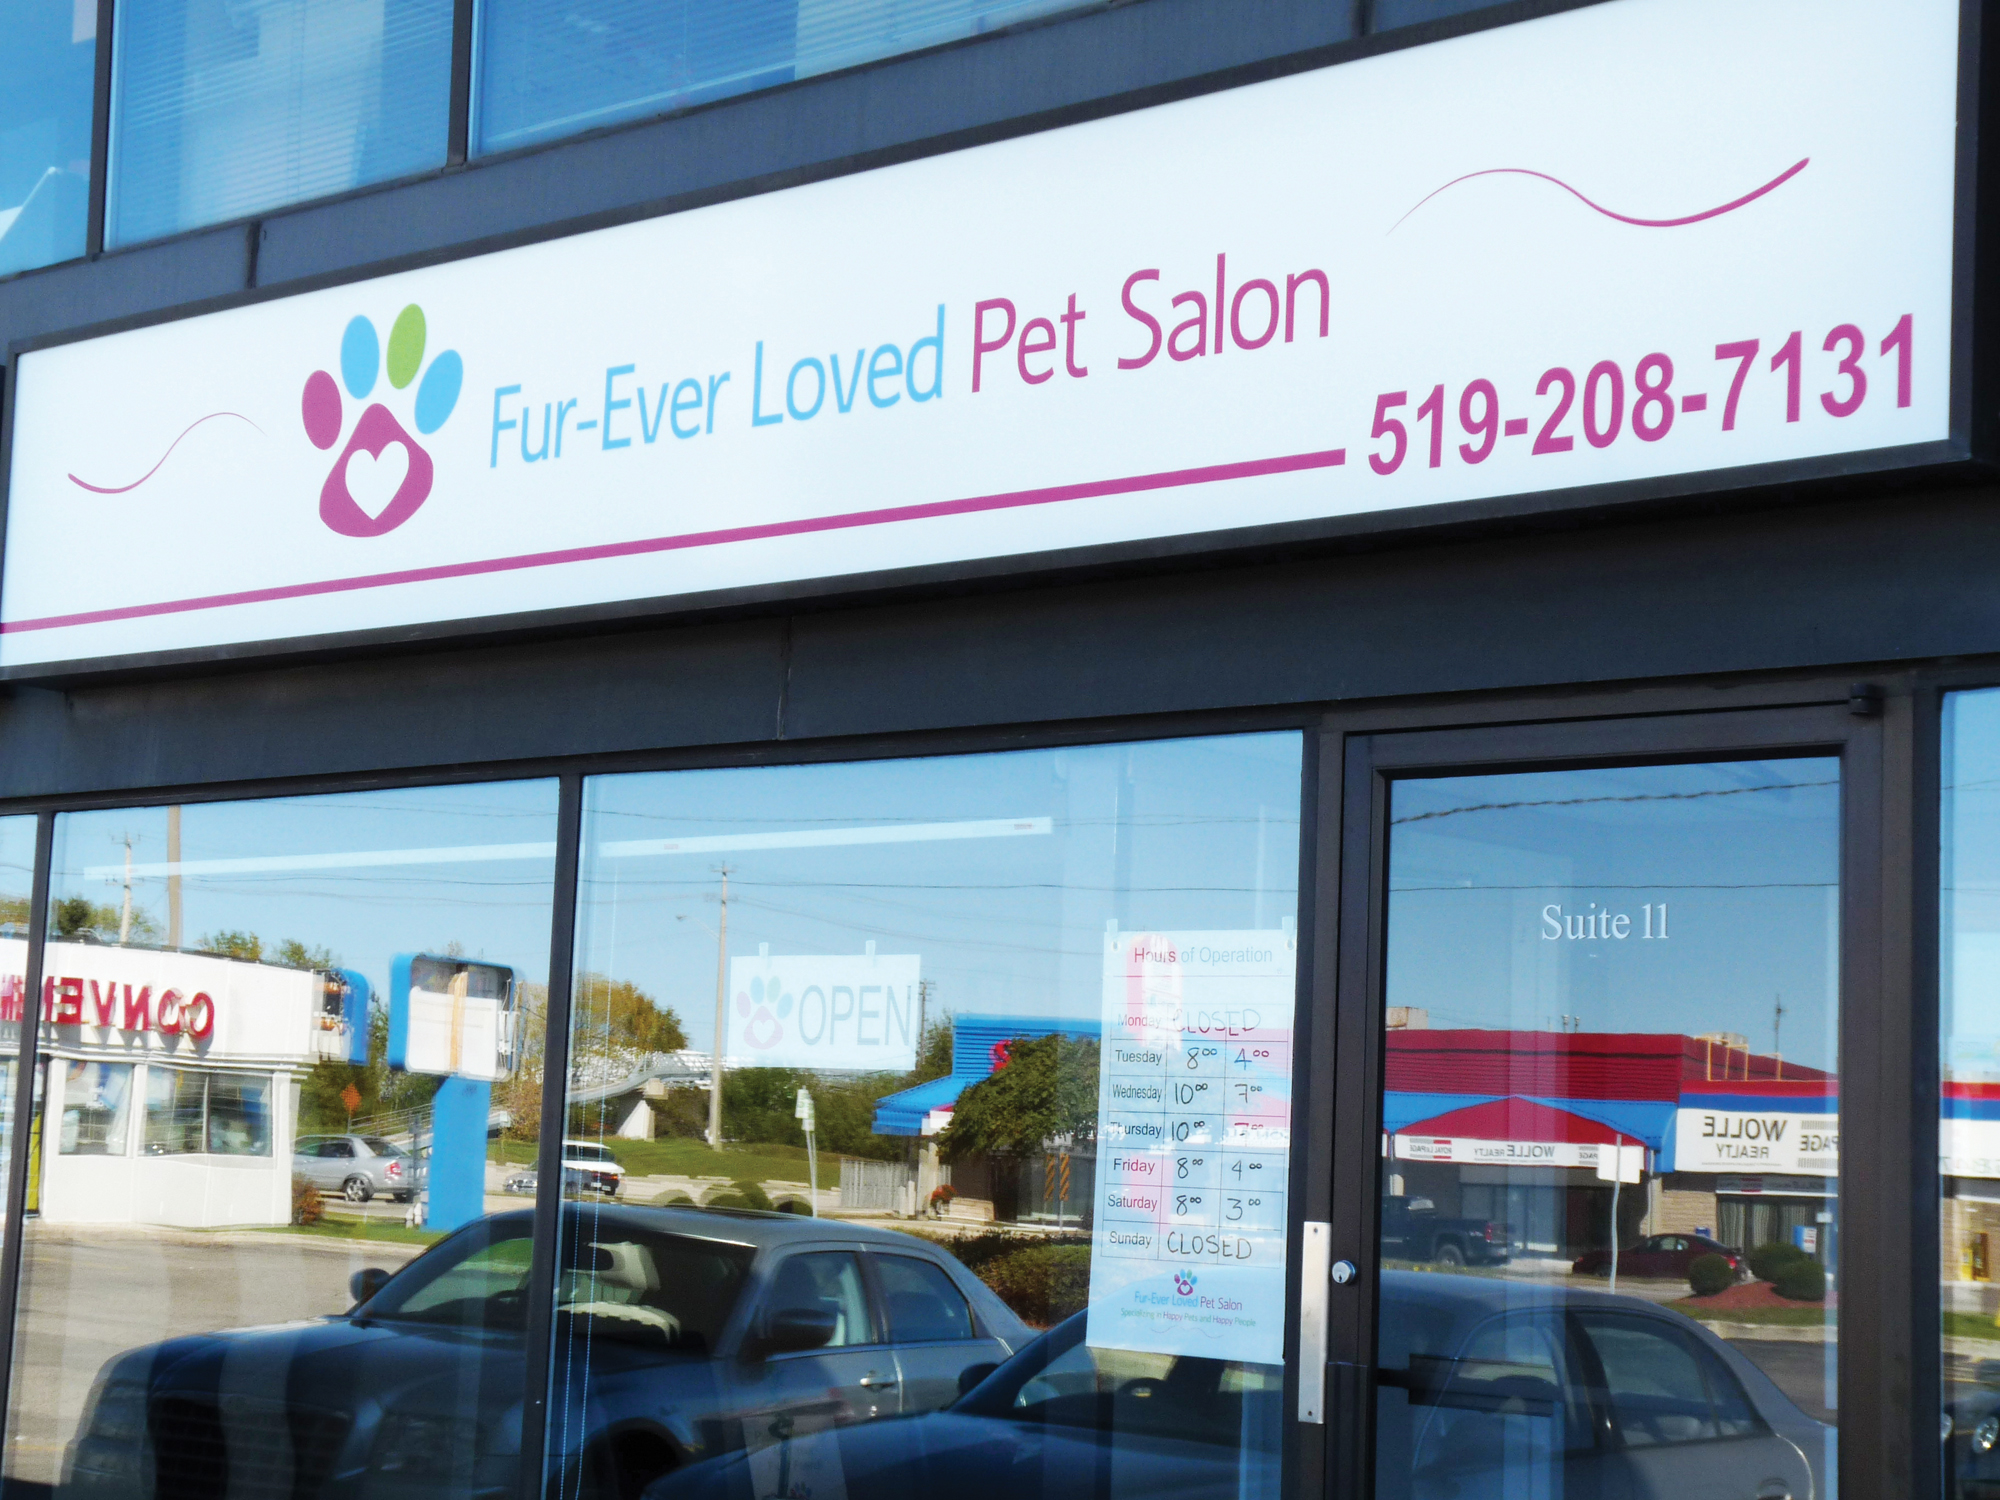 Fur-Ever Loved Pet Salon